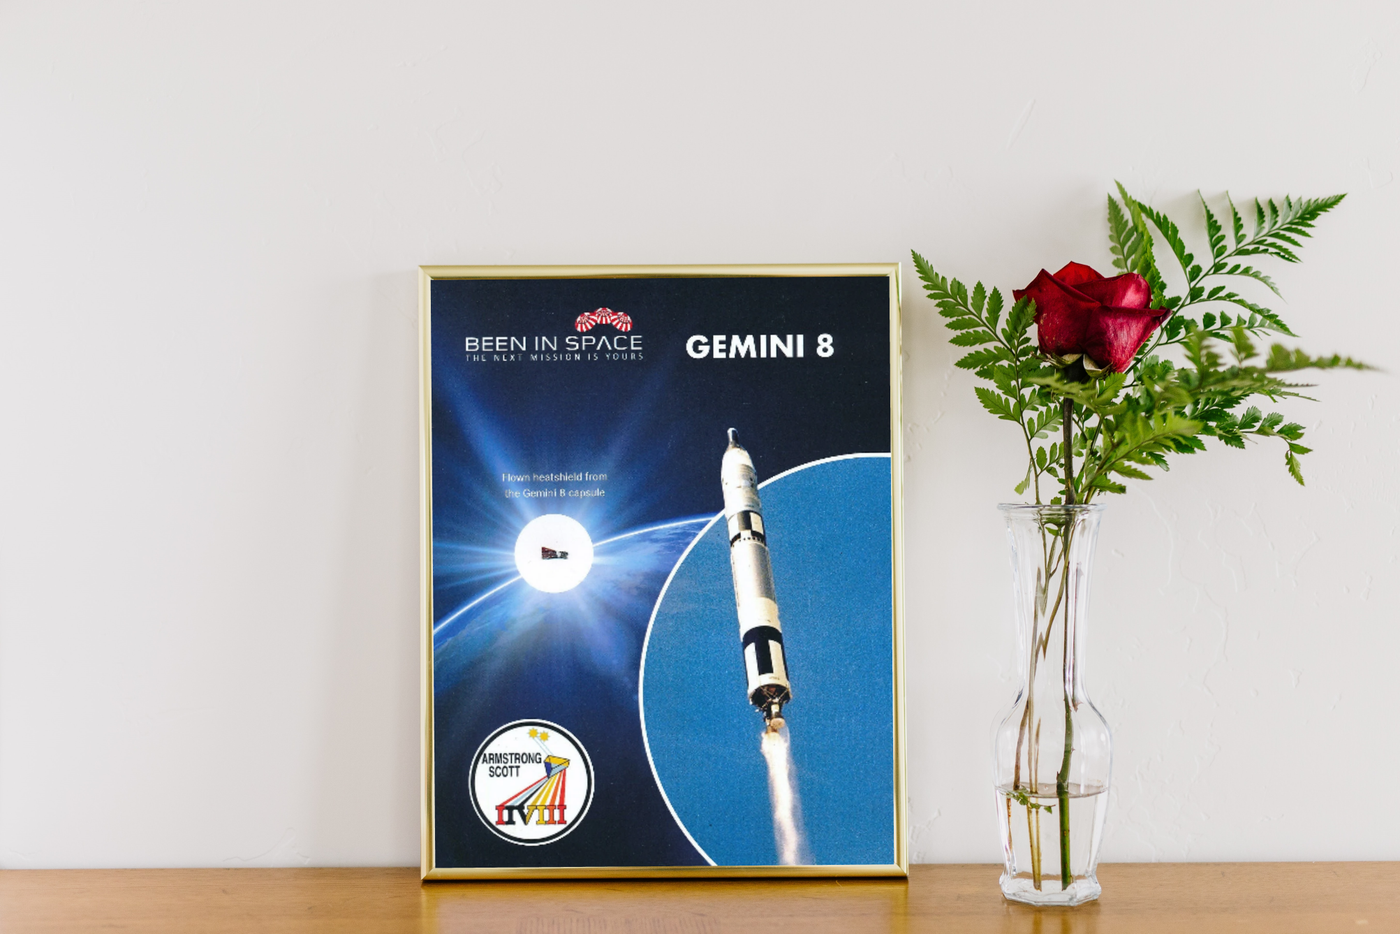 Gemini 8 space flown heatshield presentation